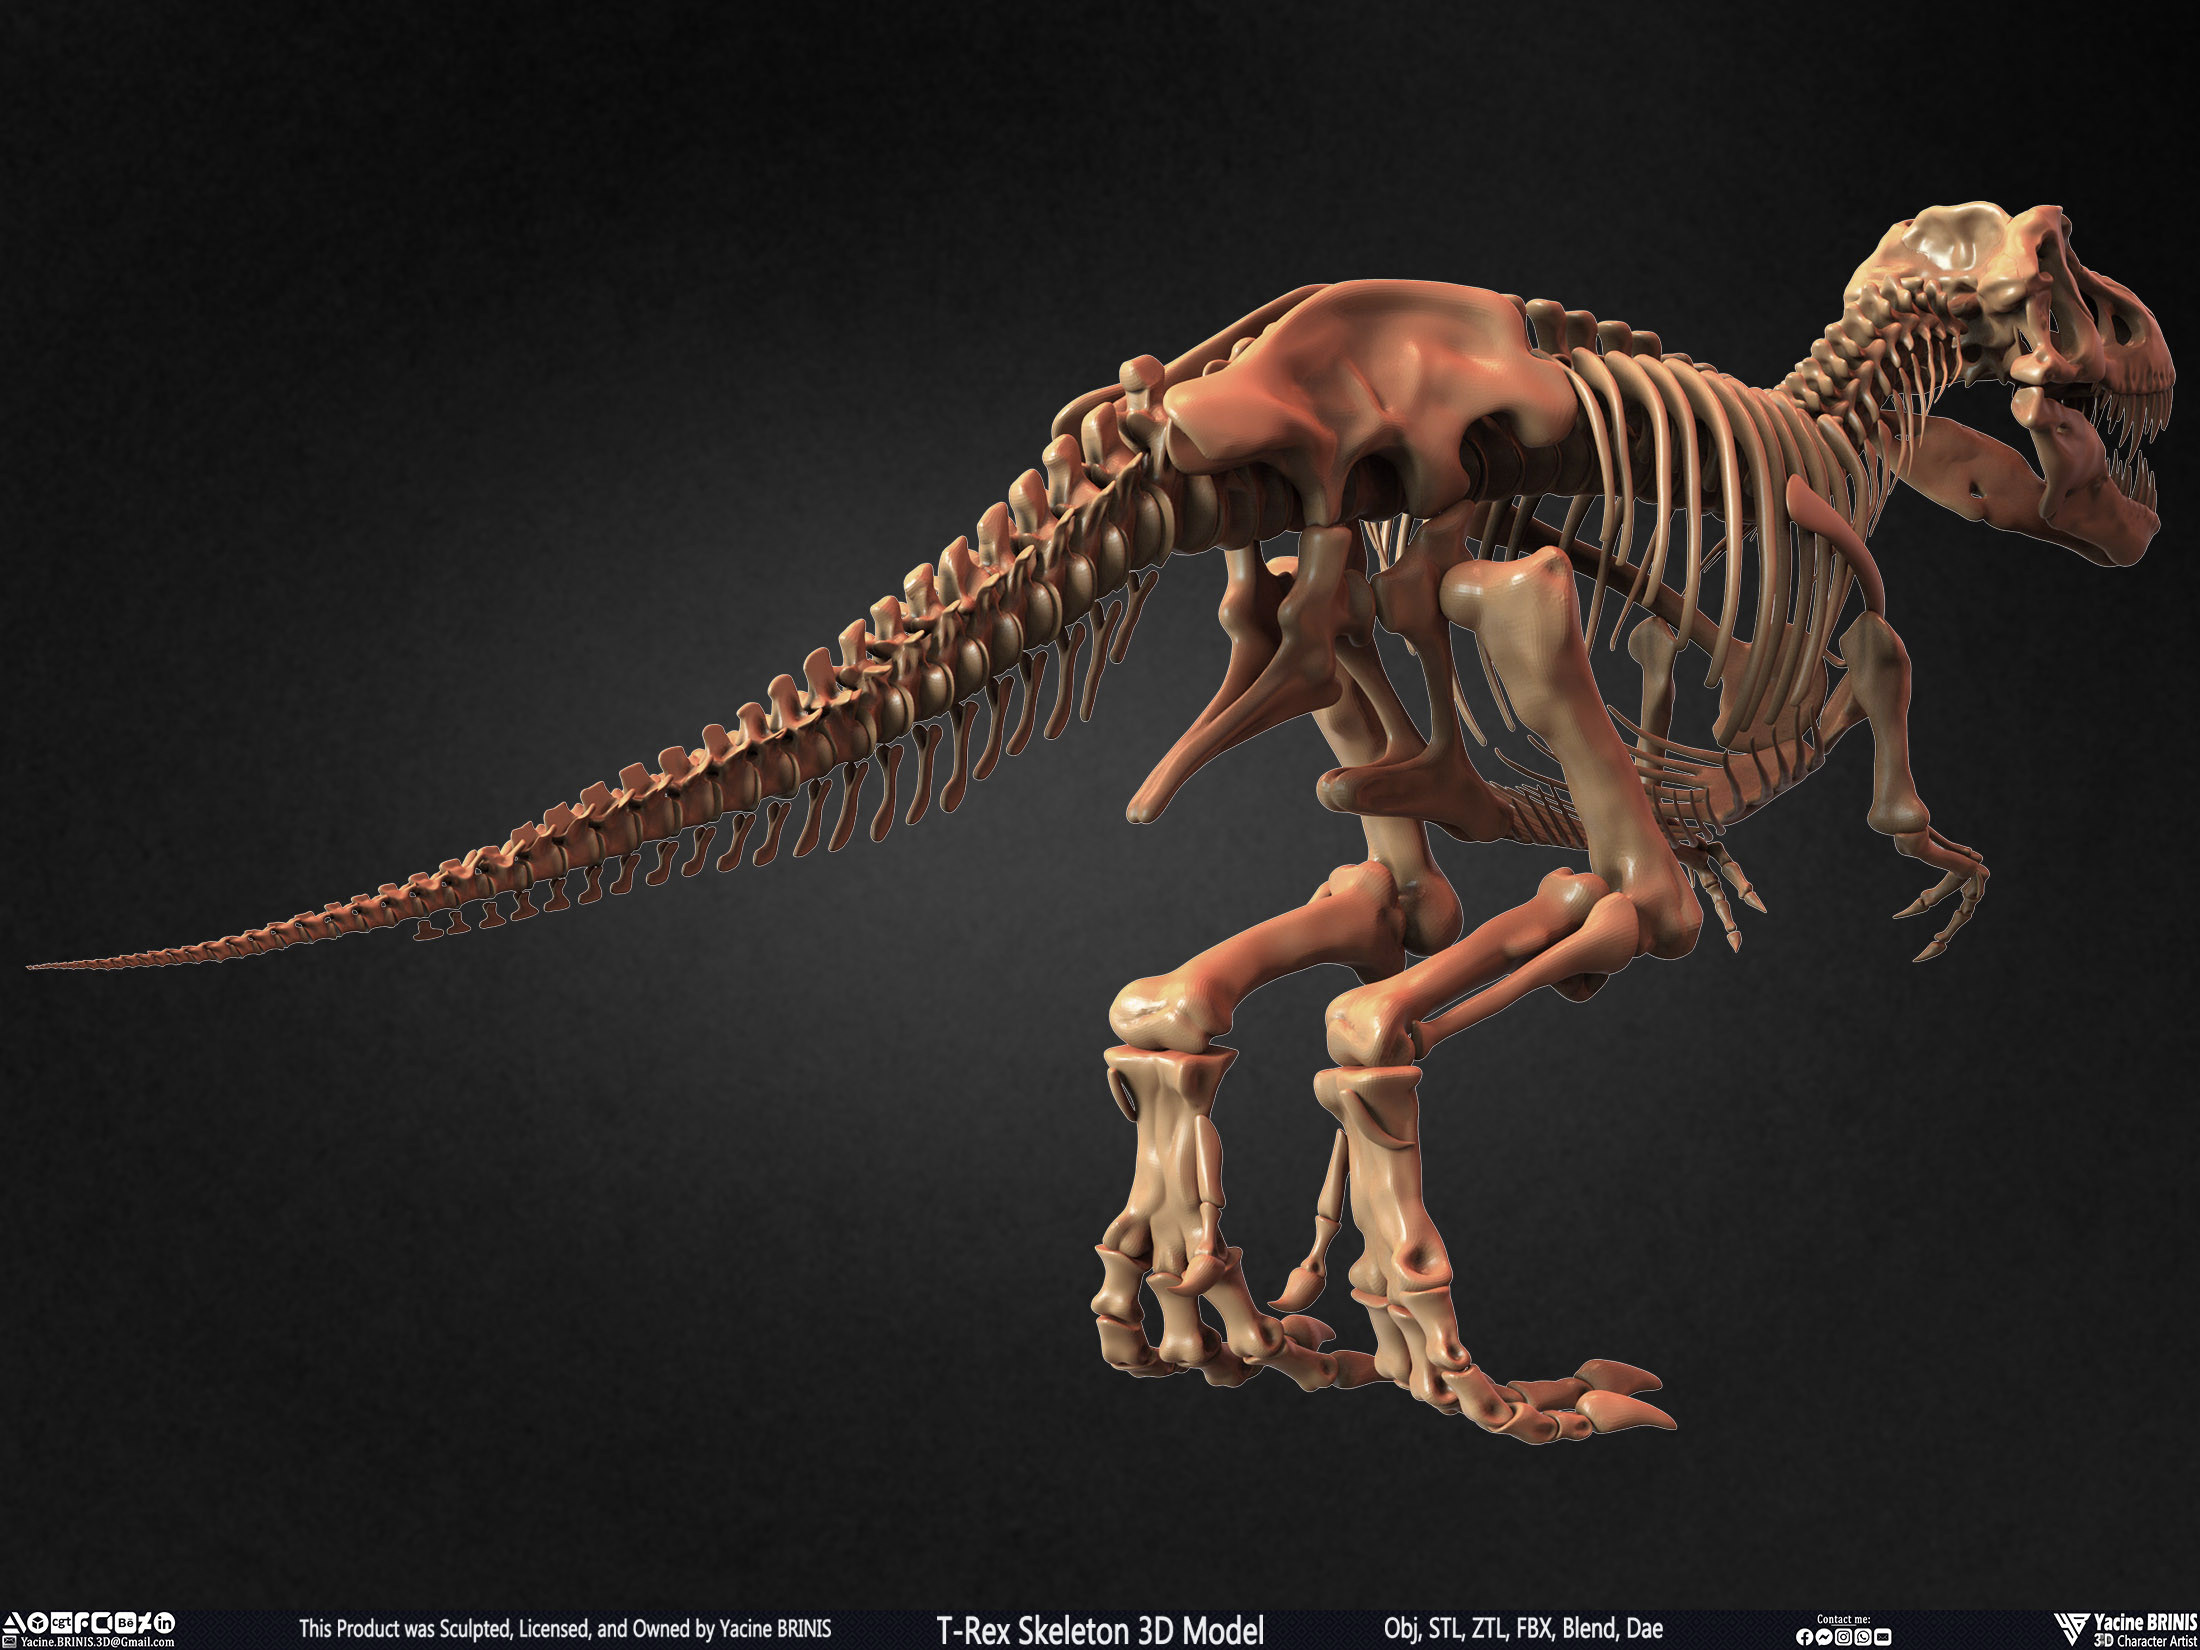 T-Rex Skeleton 3D Model (Tyrannosaurus Rex) Sculpted By Yacine BRINIS Set 008